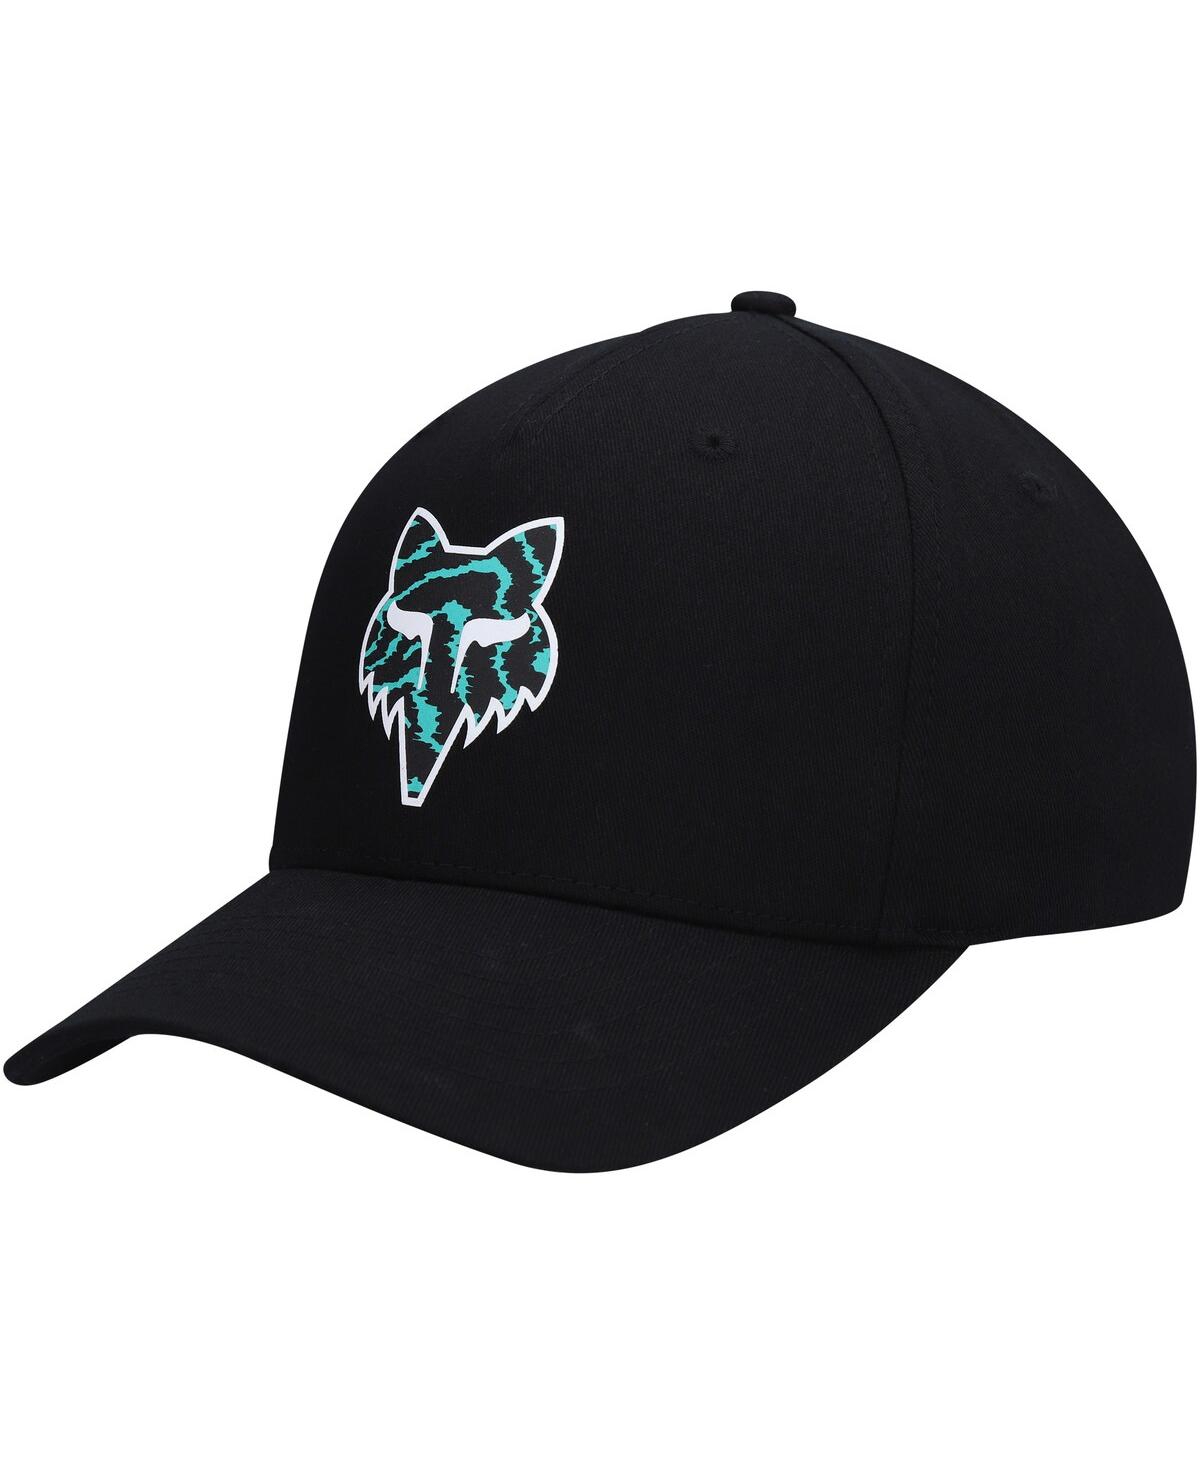 Men's Fox Black Nuklr Flex Hat - Black